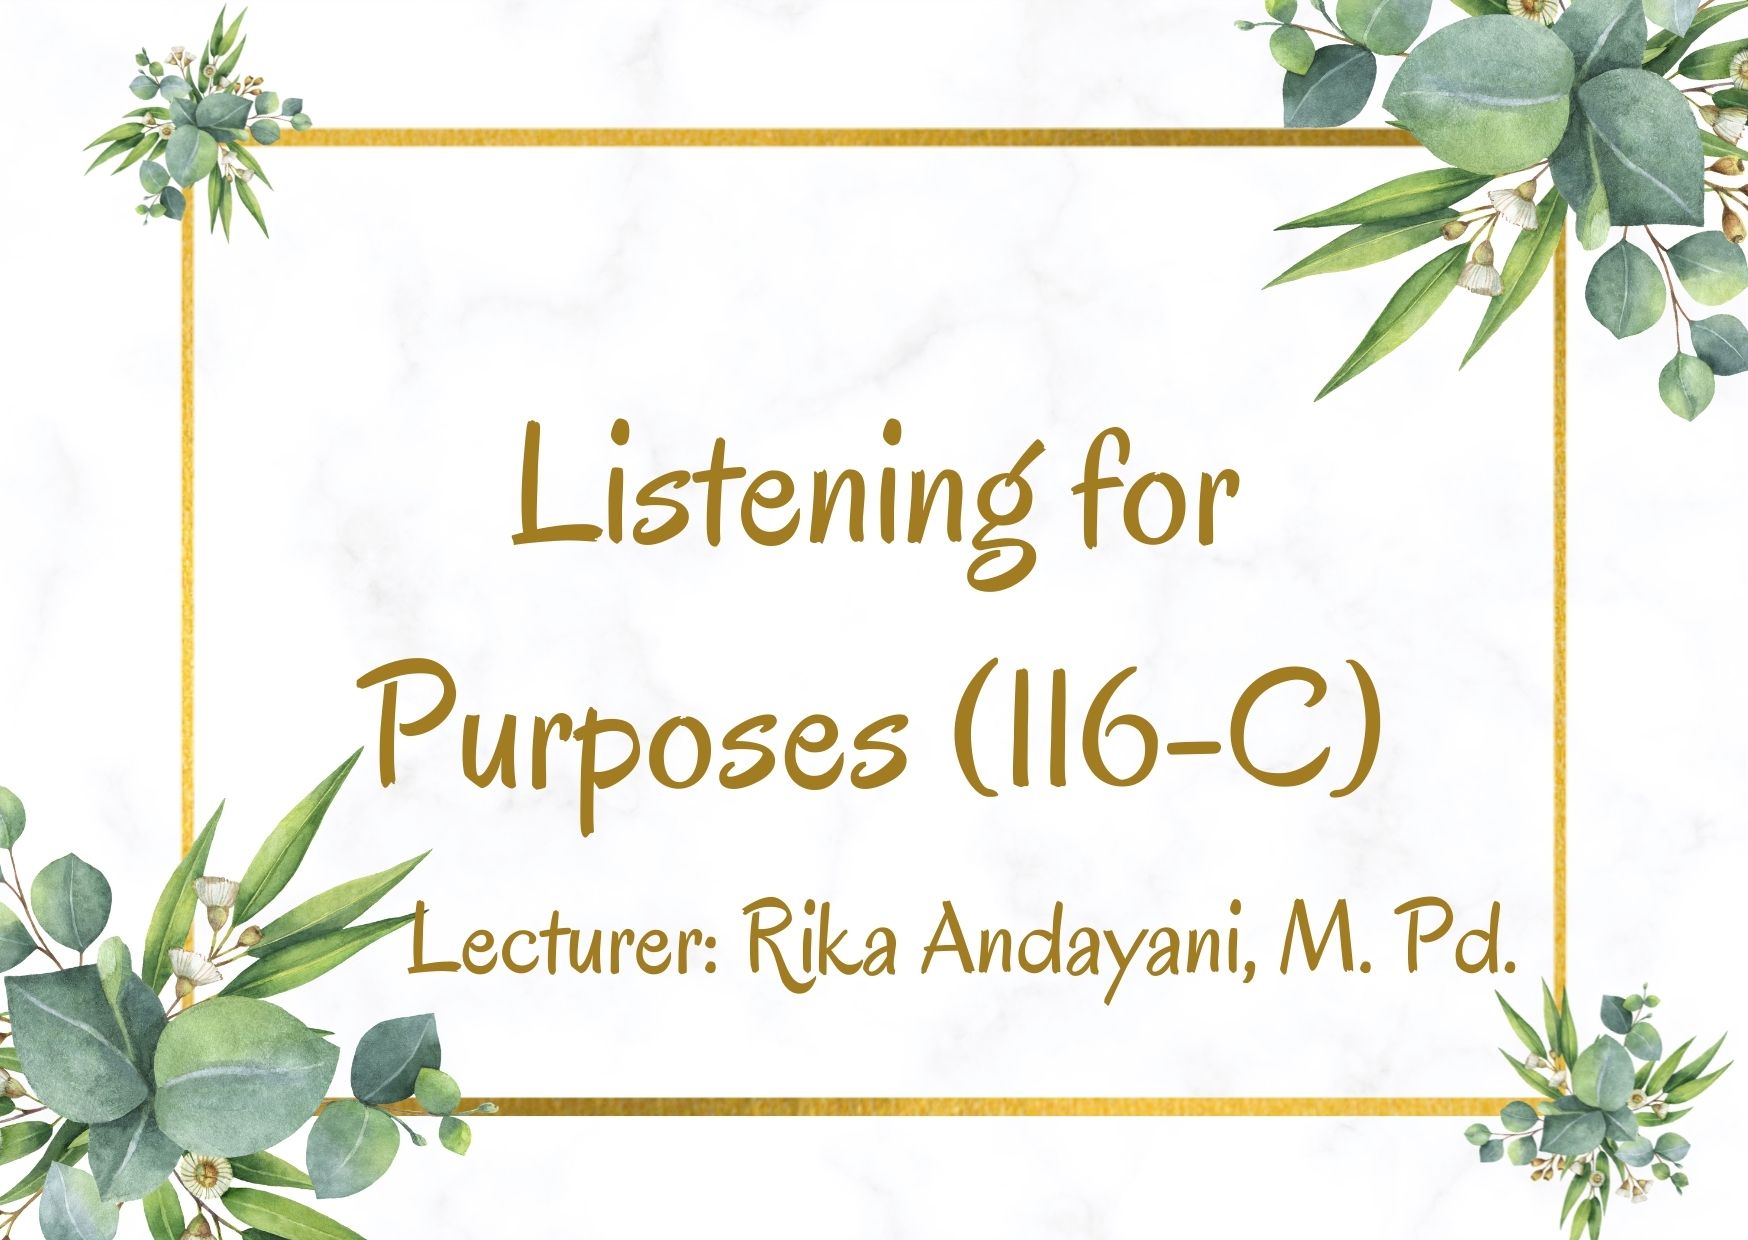 Listening for Academic Purposes (116-C)